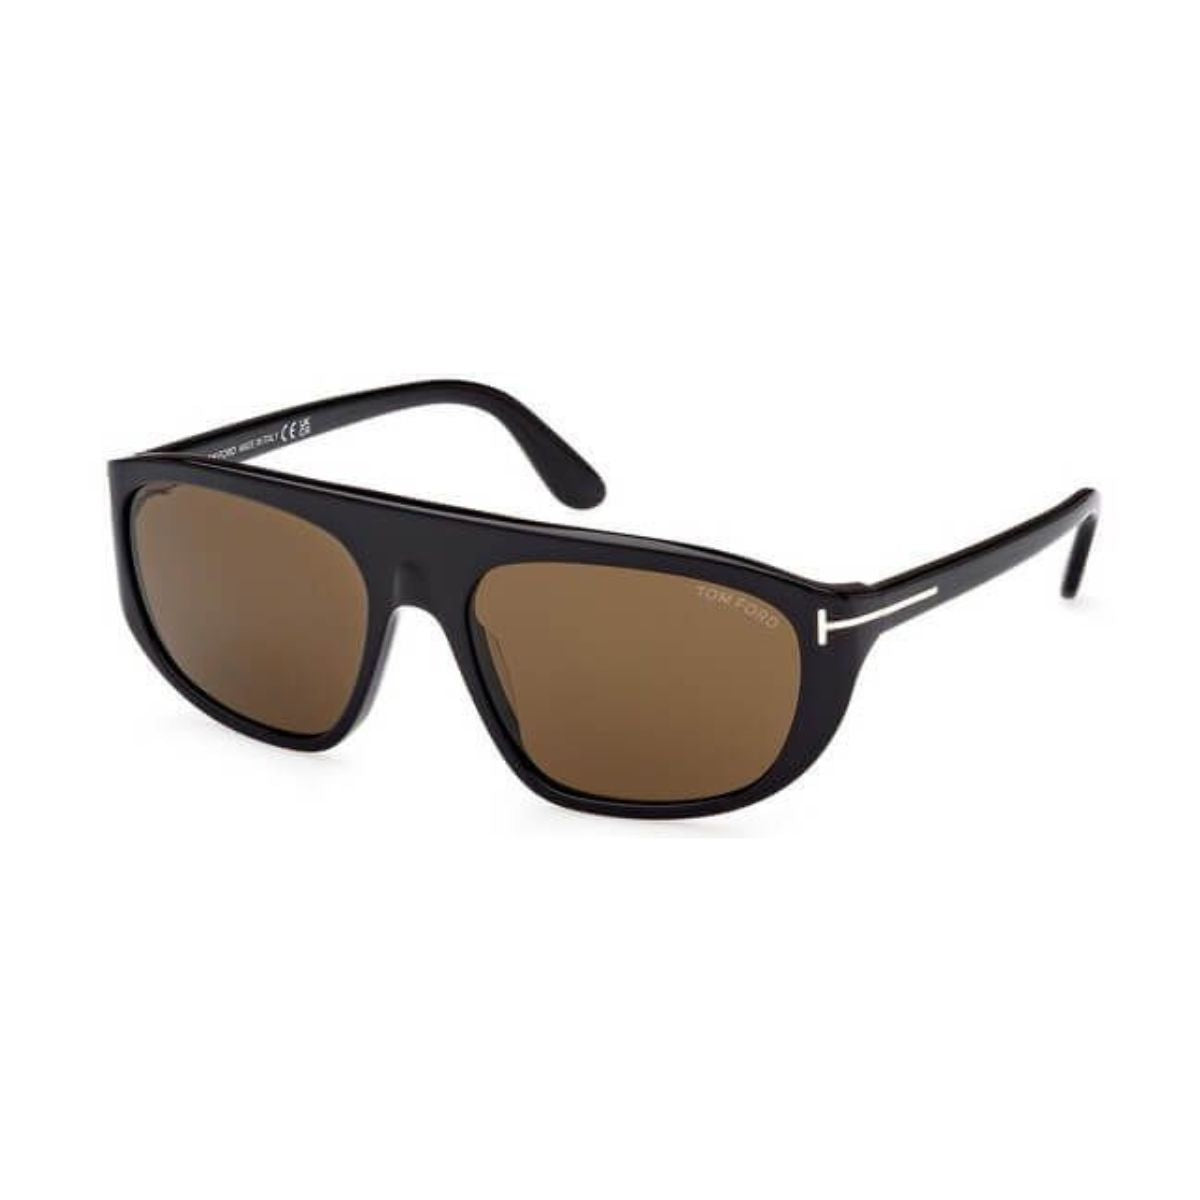 "Buy Stylish Tom Ford Aviator Sunglasses For Mens At Optorium"